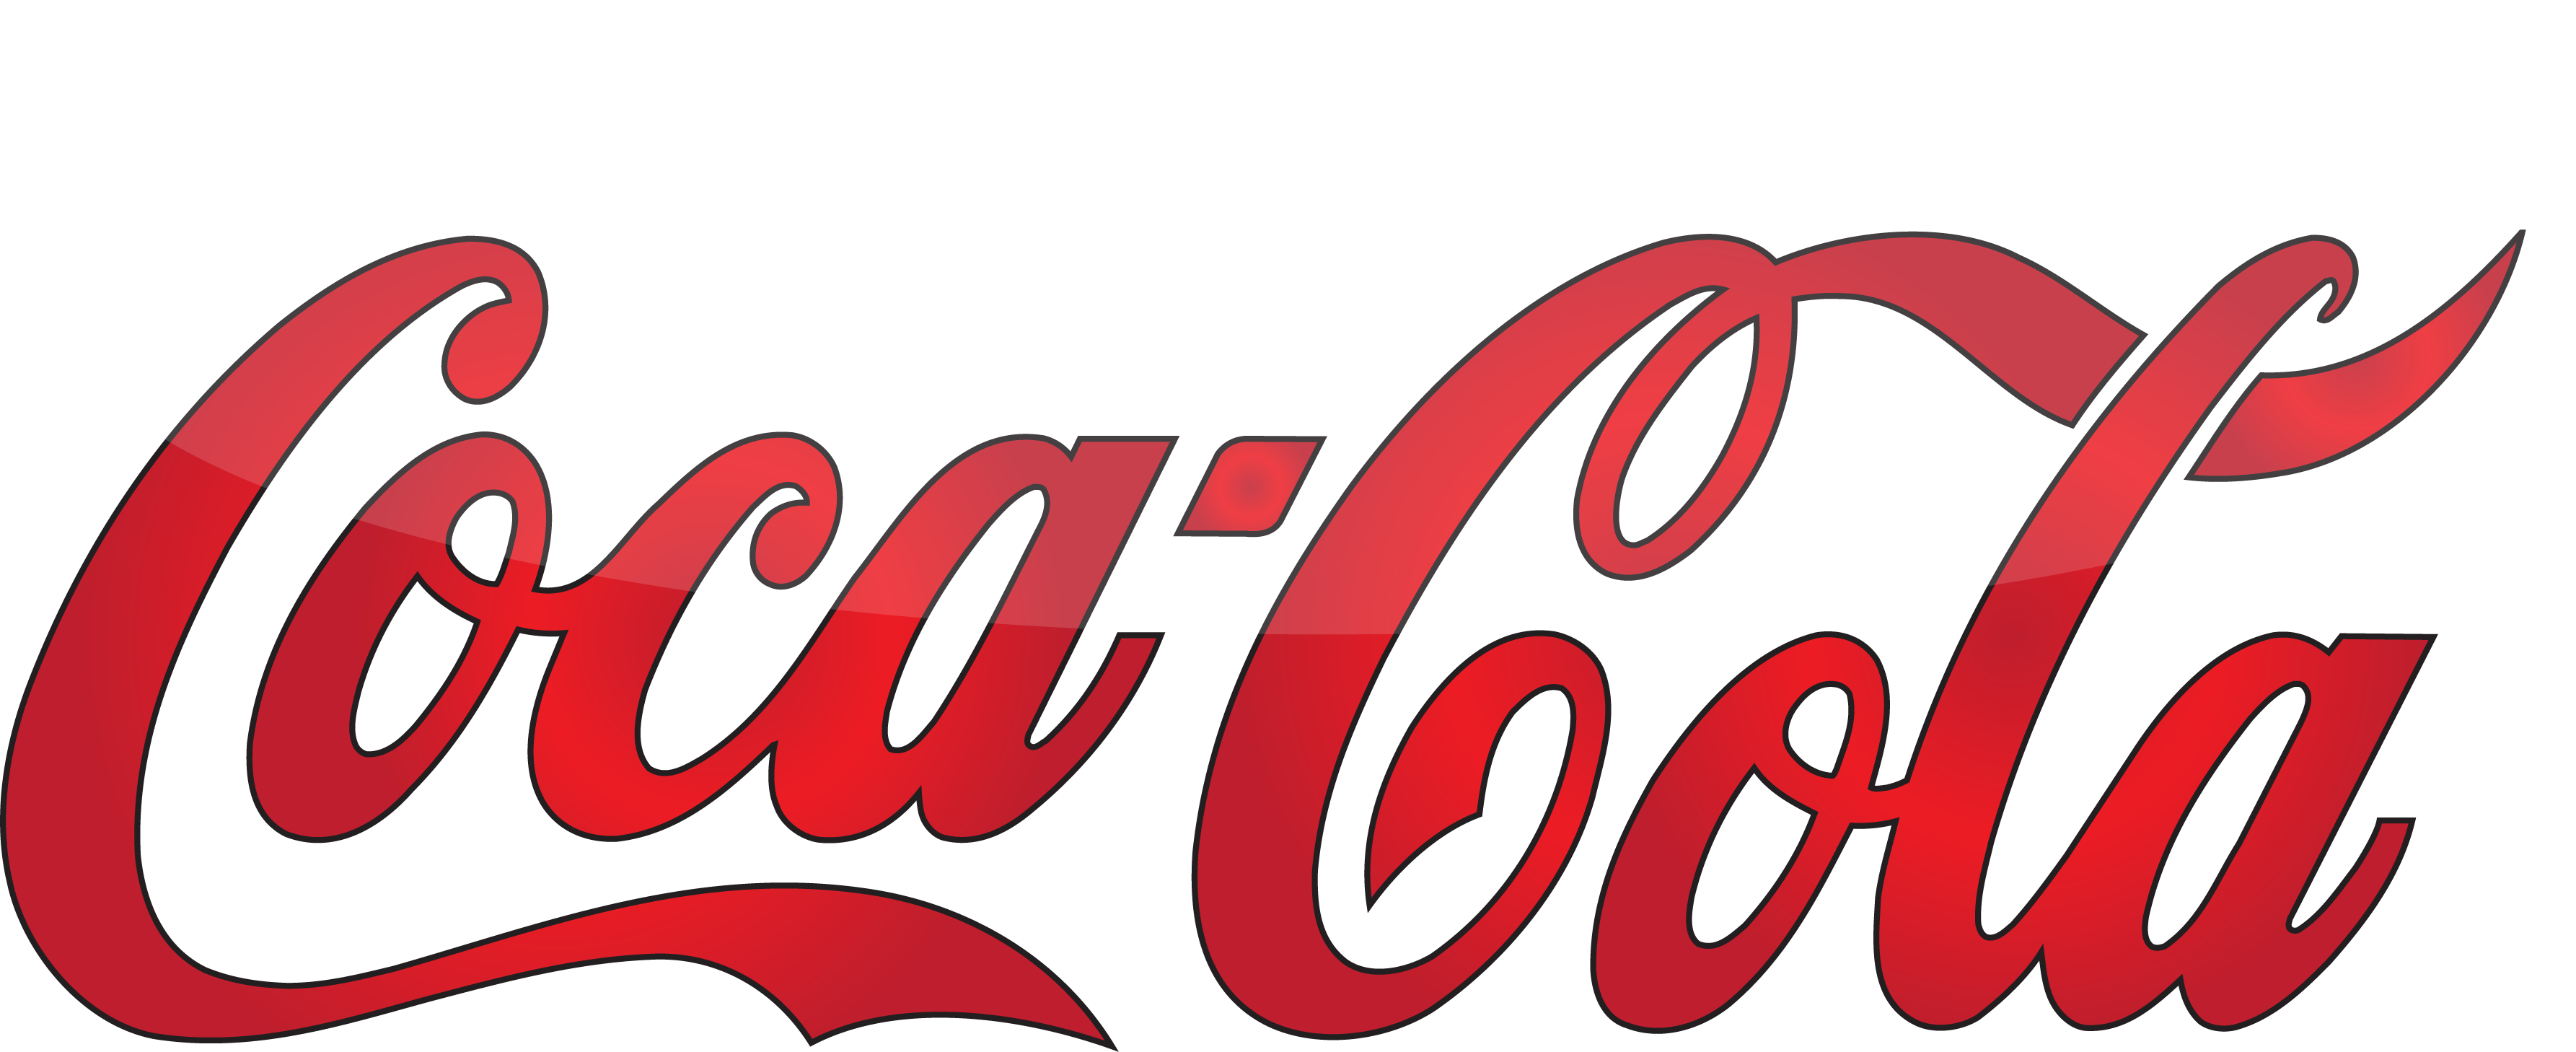 Diet Coke Coca Cola PNG Free File Download